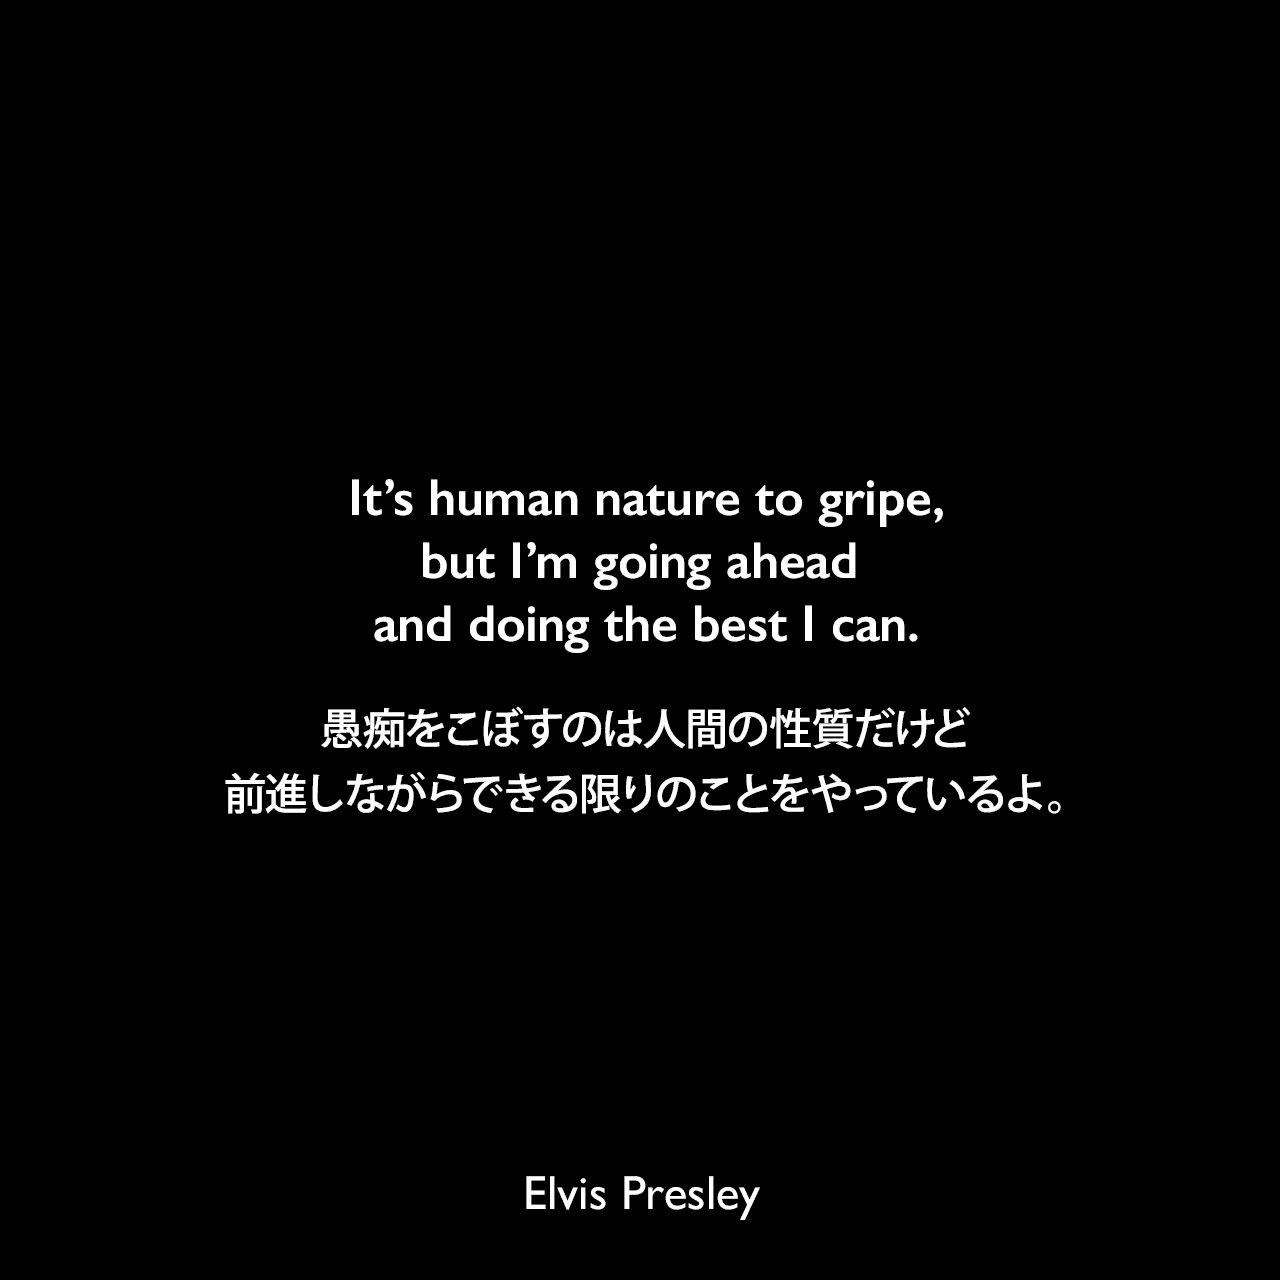 It’s human nature to gripe, but I’m going ahead and doing the best I can.愚痴をこぼすのは人間の性質だけど、前進しながらできる限りのことをやっているよ。Elvis Presley